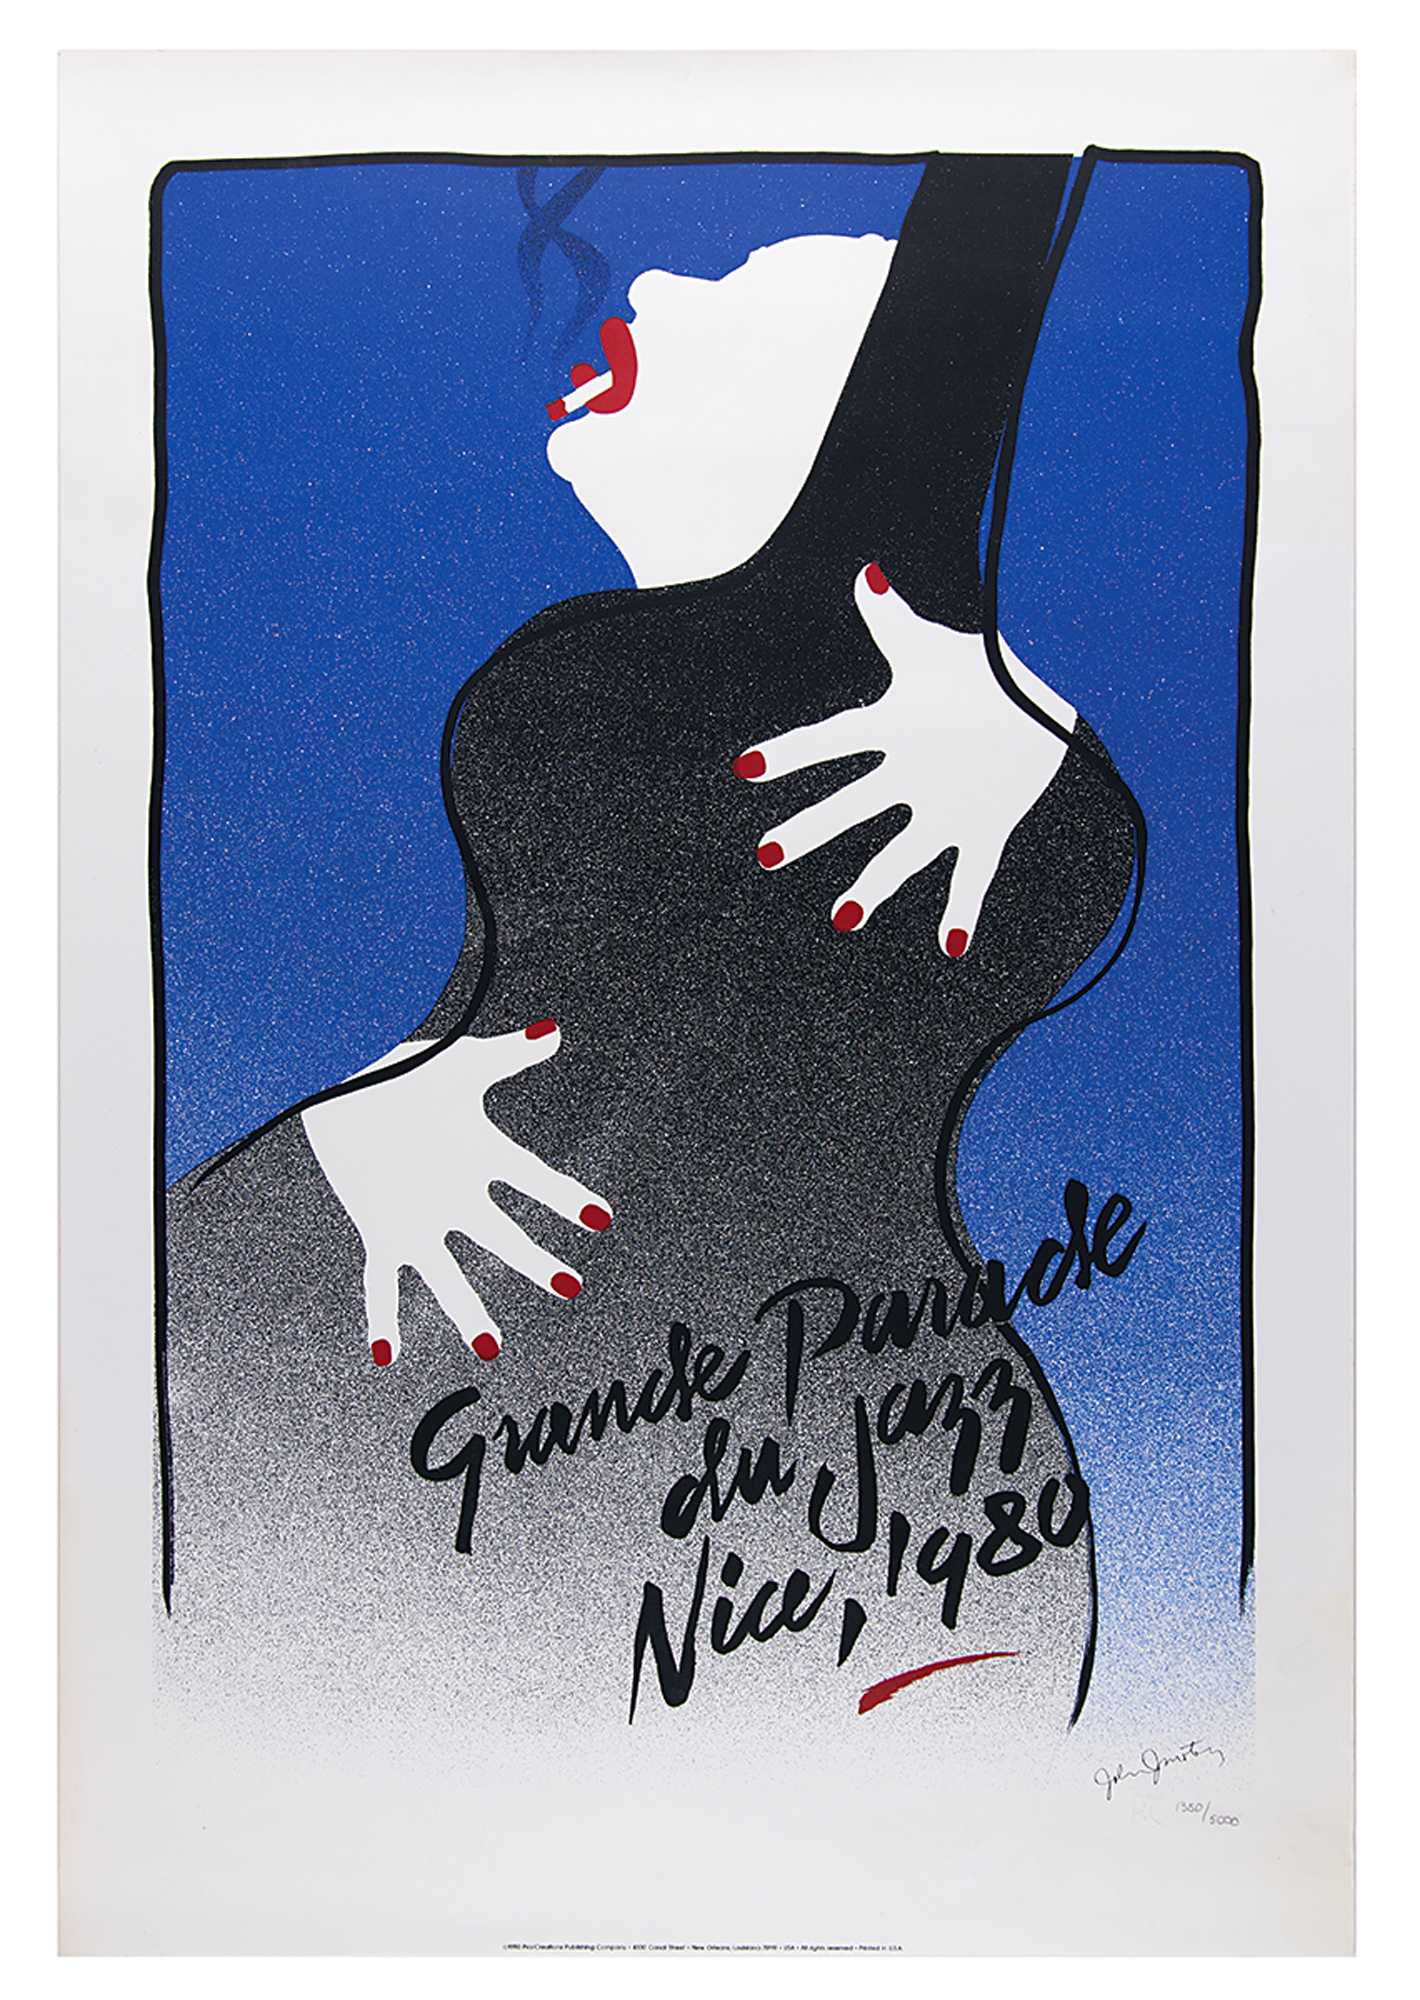 Lot #786 Grande Parade du Jazz 1980 Poster - Image 1